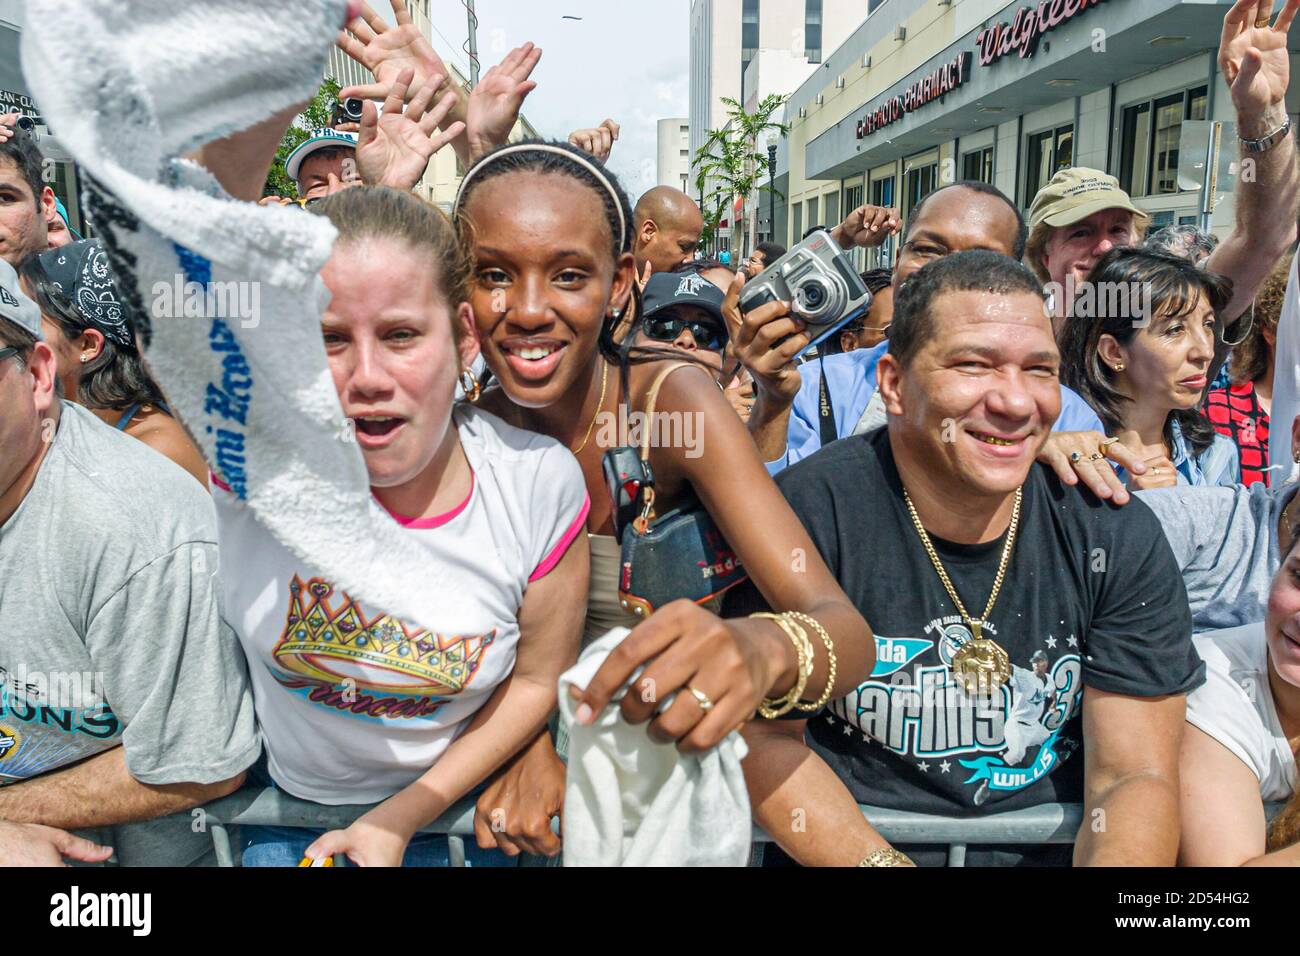 Miami Florida,Flagler Street,Marlins Major League Baseball team World Series vincitore,i tifosi festeggiano la sfilata,Black African Ispan girl girl Foto Stock